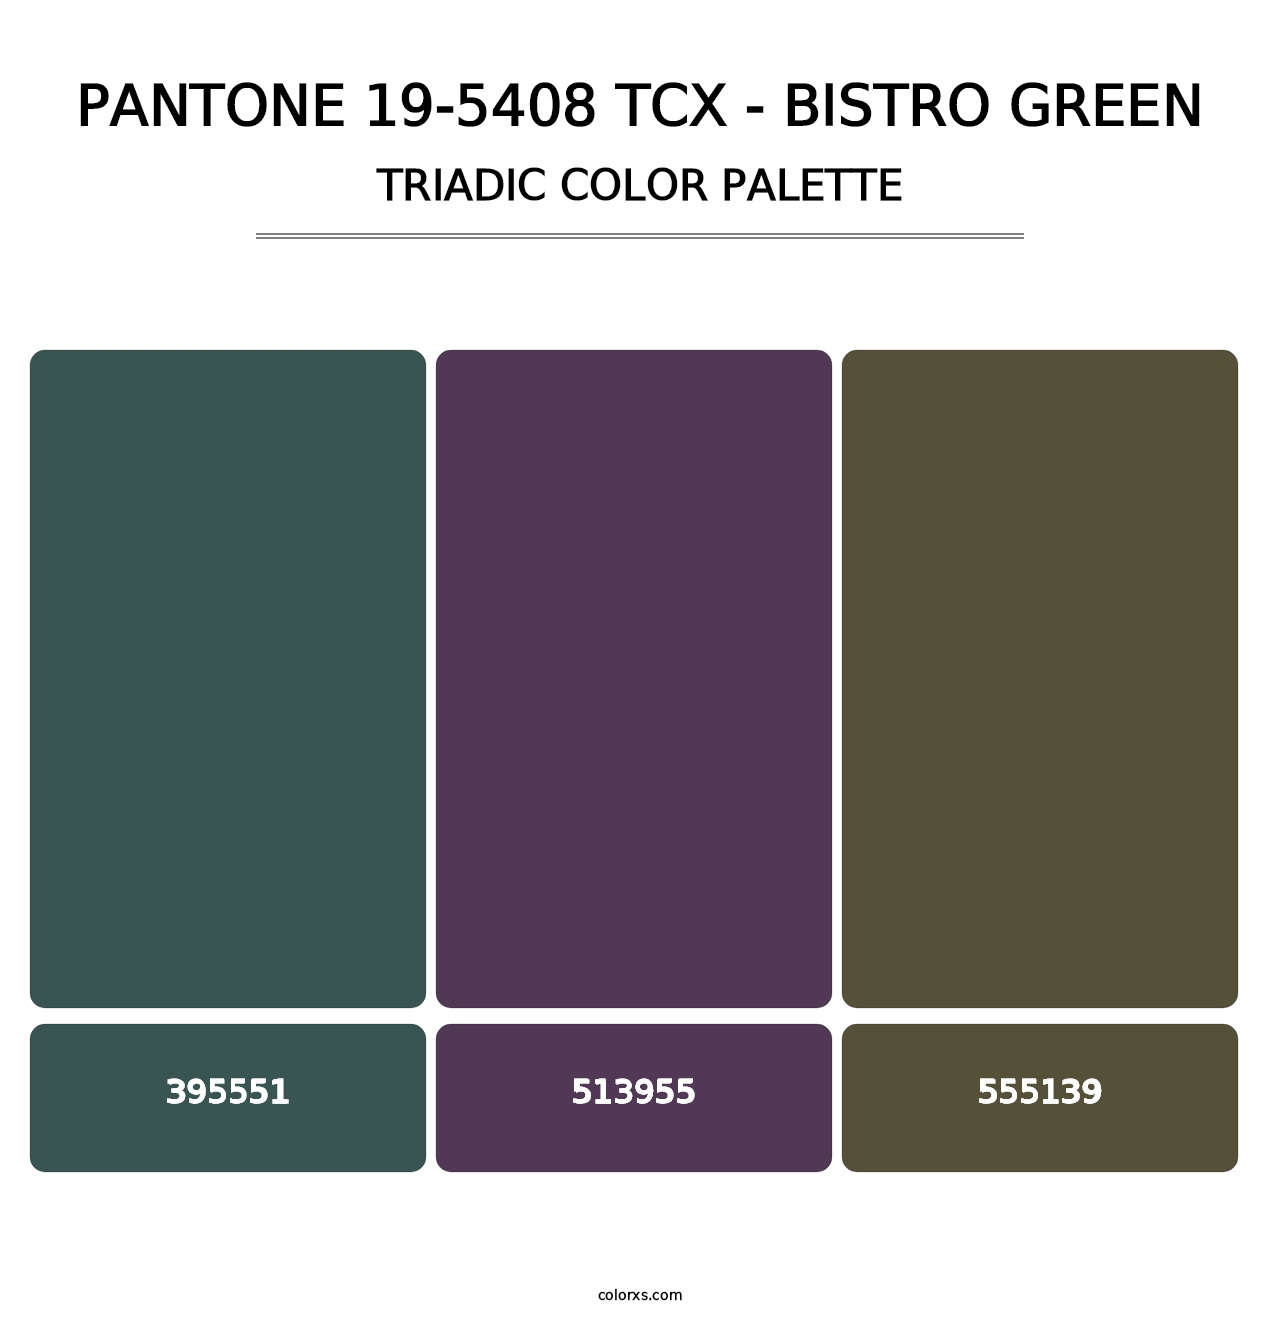 PANTONE 19-5408 TCX - Bistro Green - Triadic Color Palette